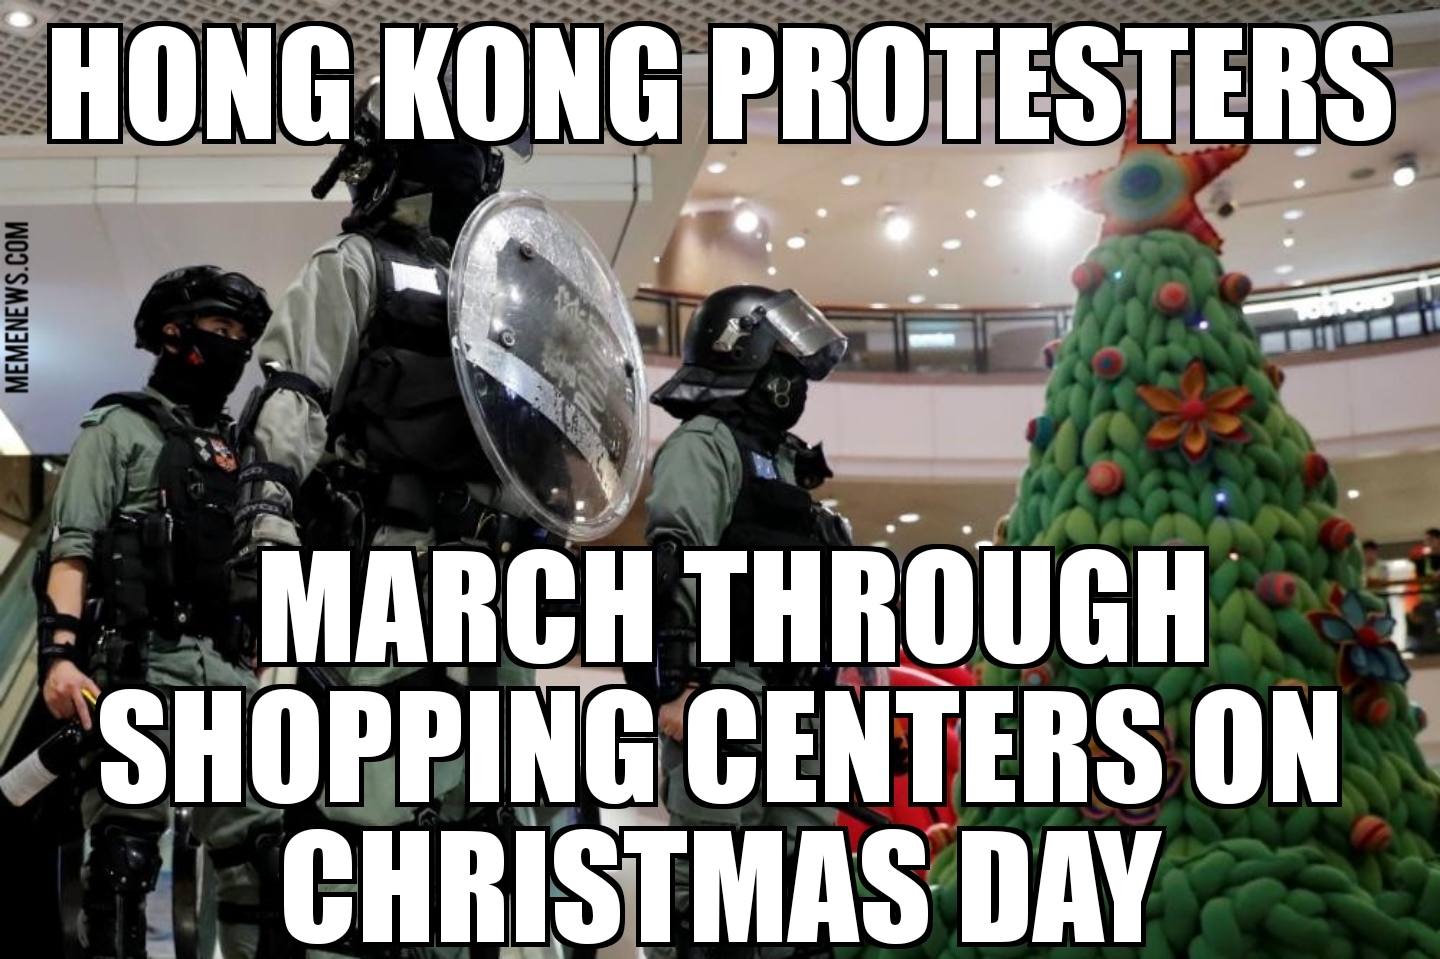 Hong Kong protests continue on Christmas